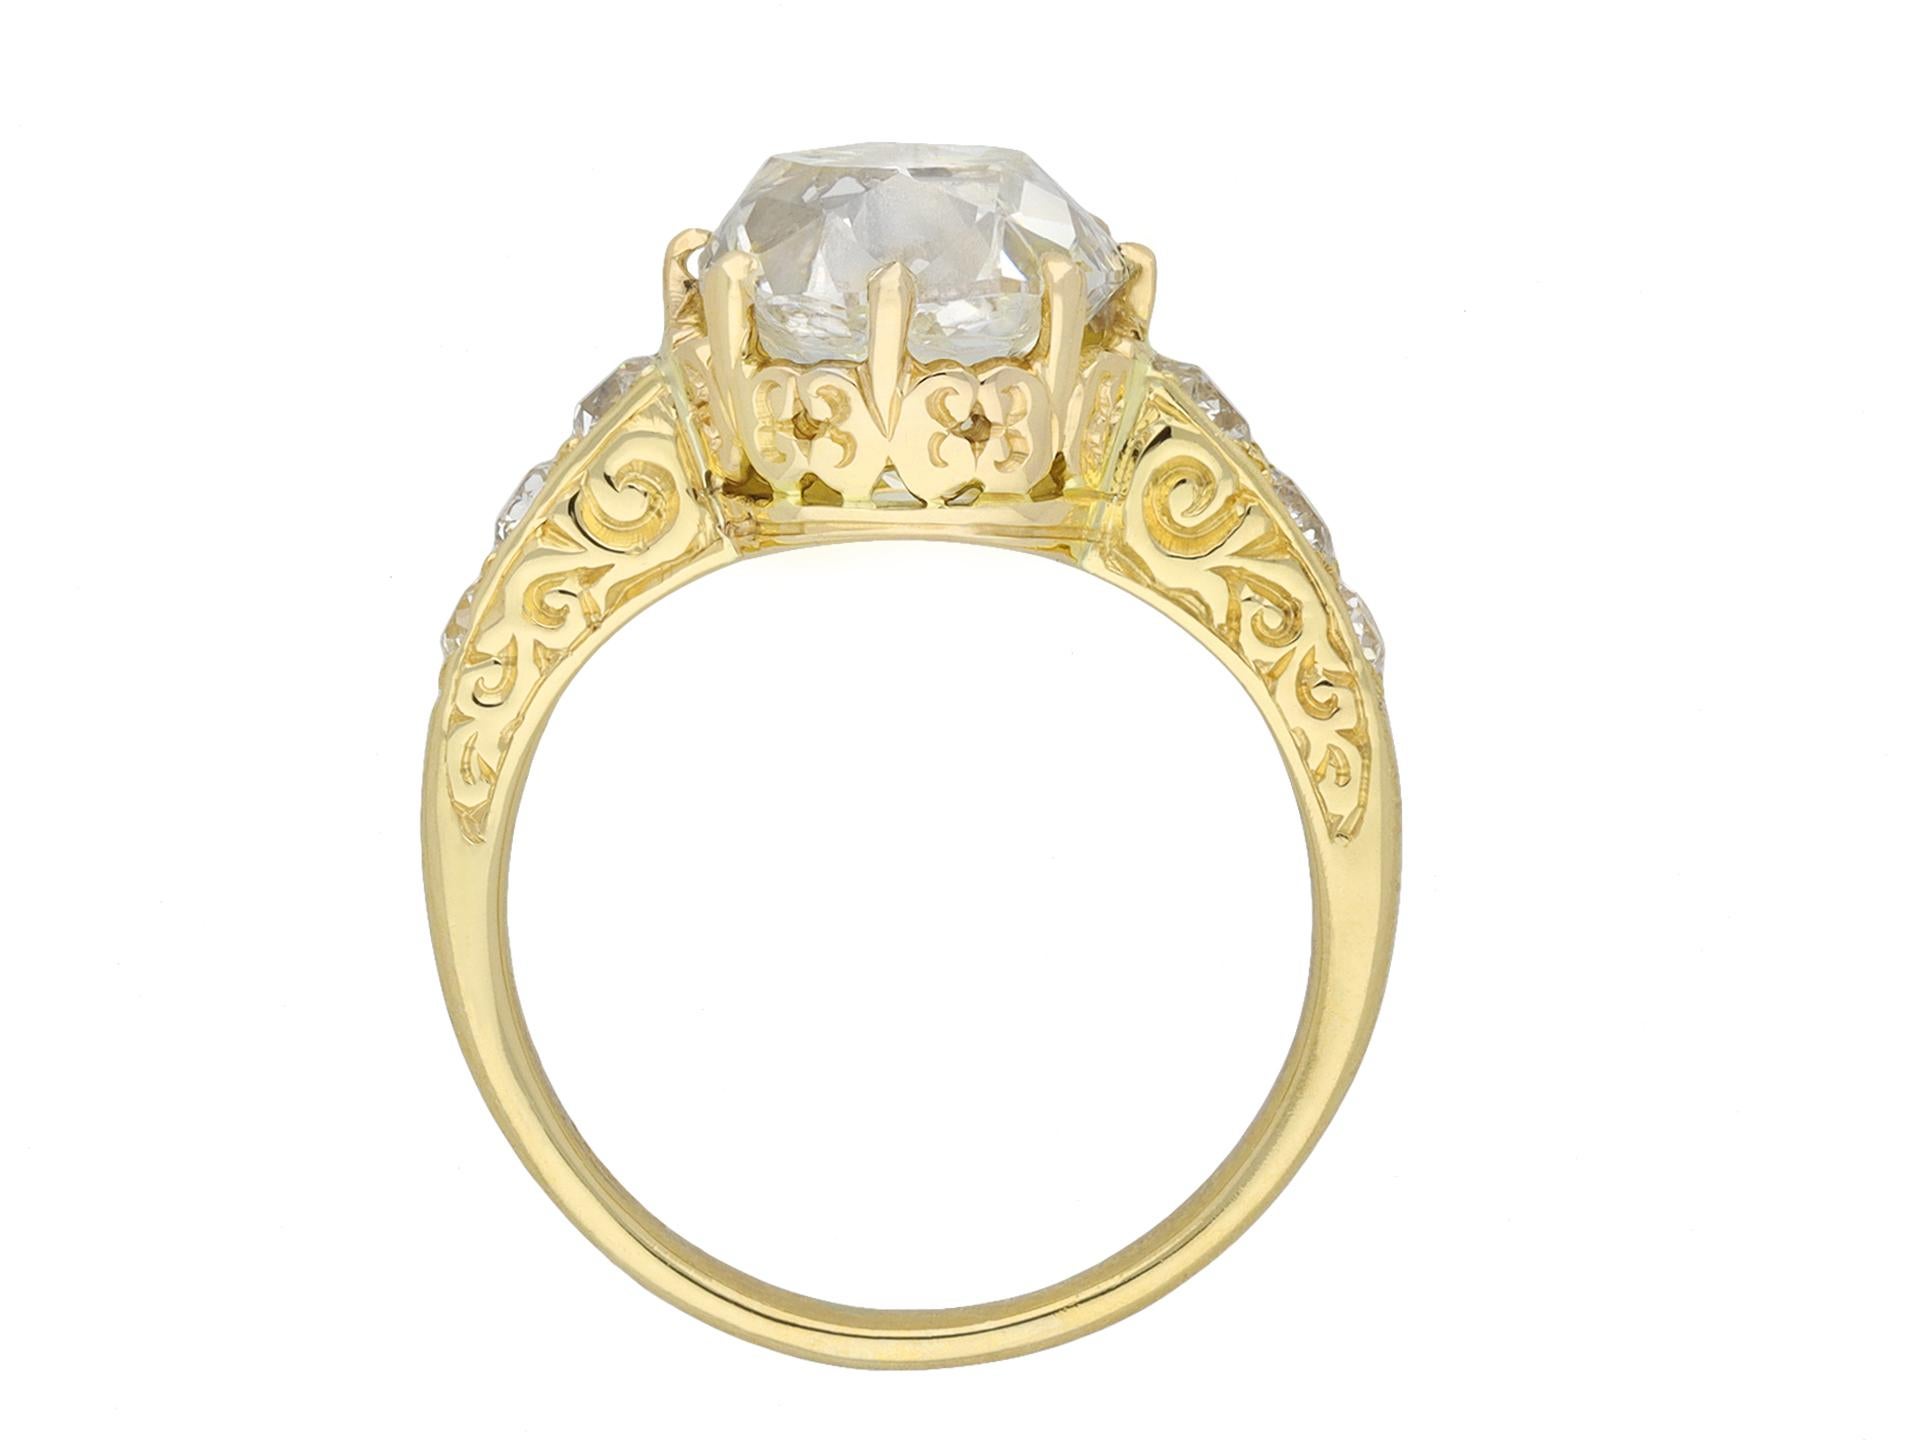 1900 engagement ring